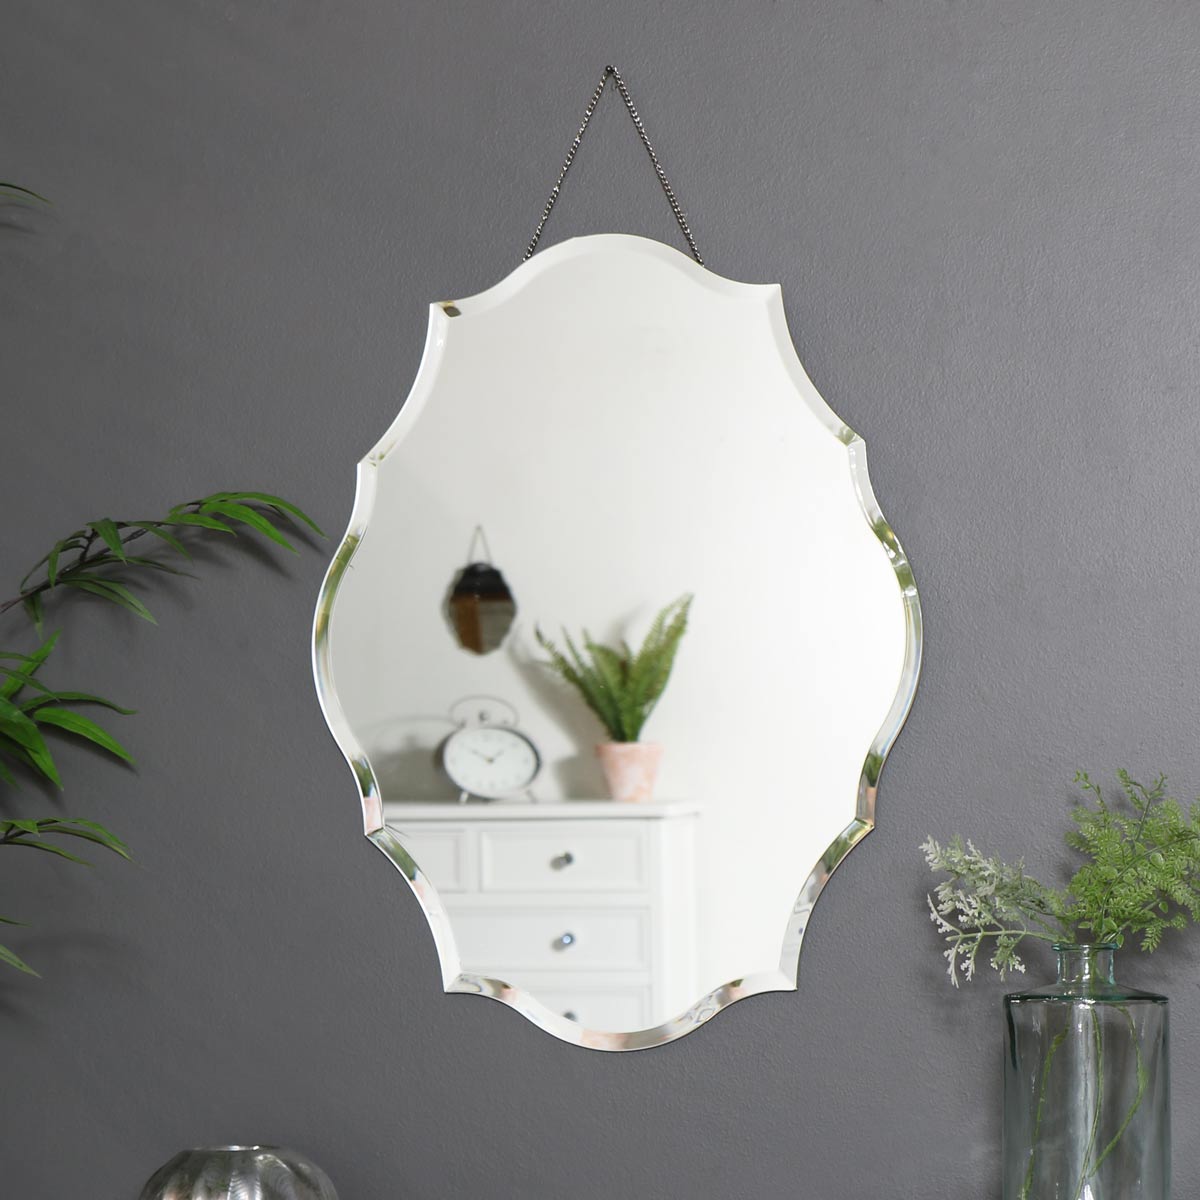 Ornate Framless Bevelled Wall Mirror, Beveled Wall Mirror Bathroom